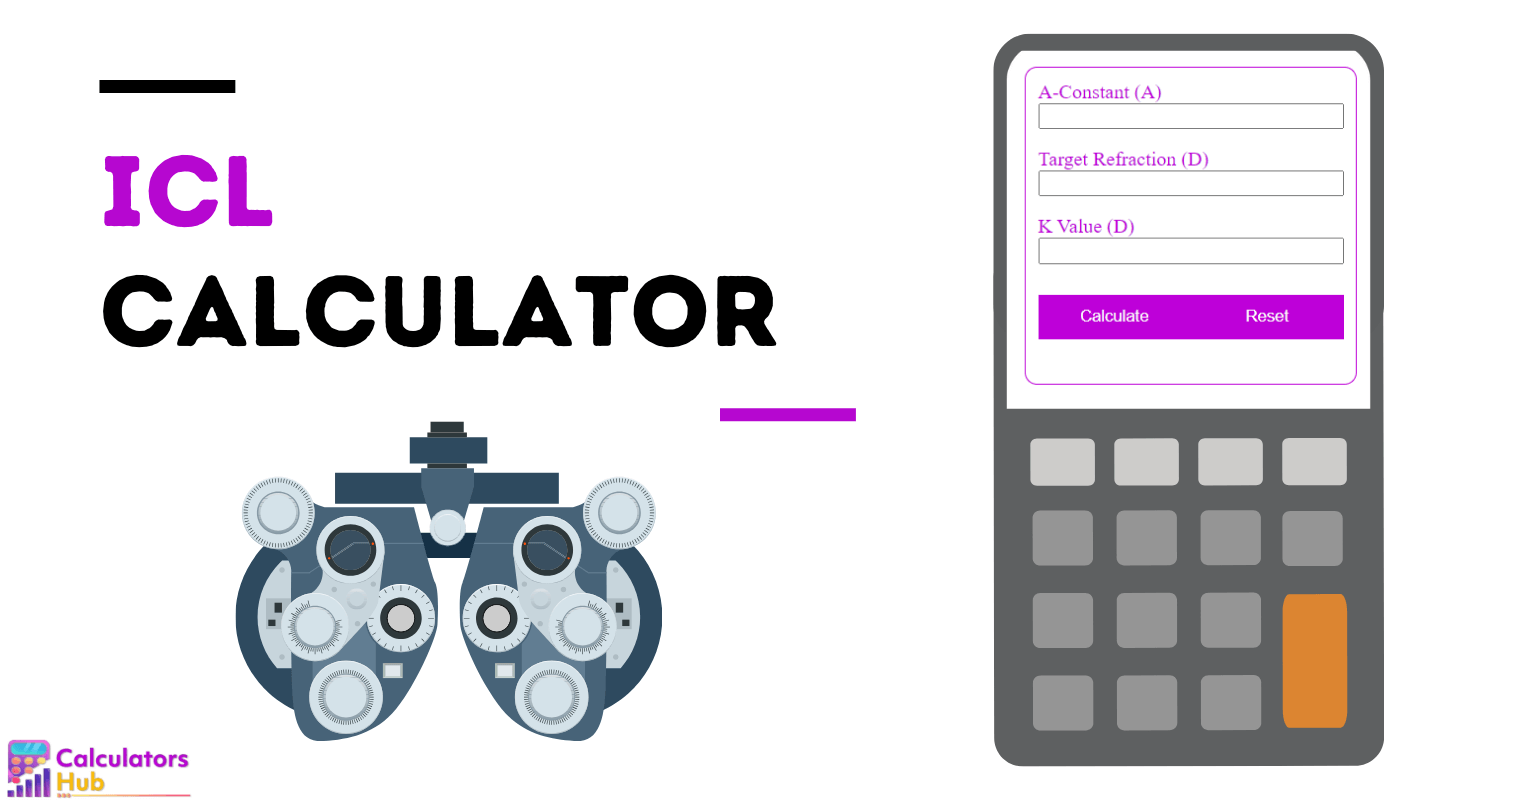 ICL Calculator